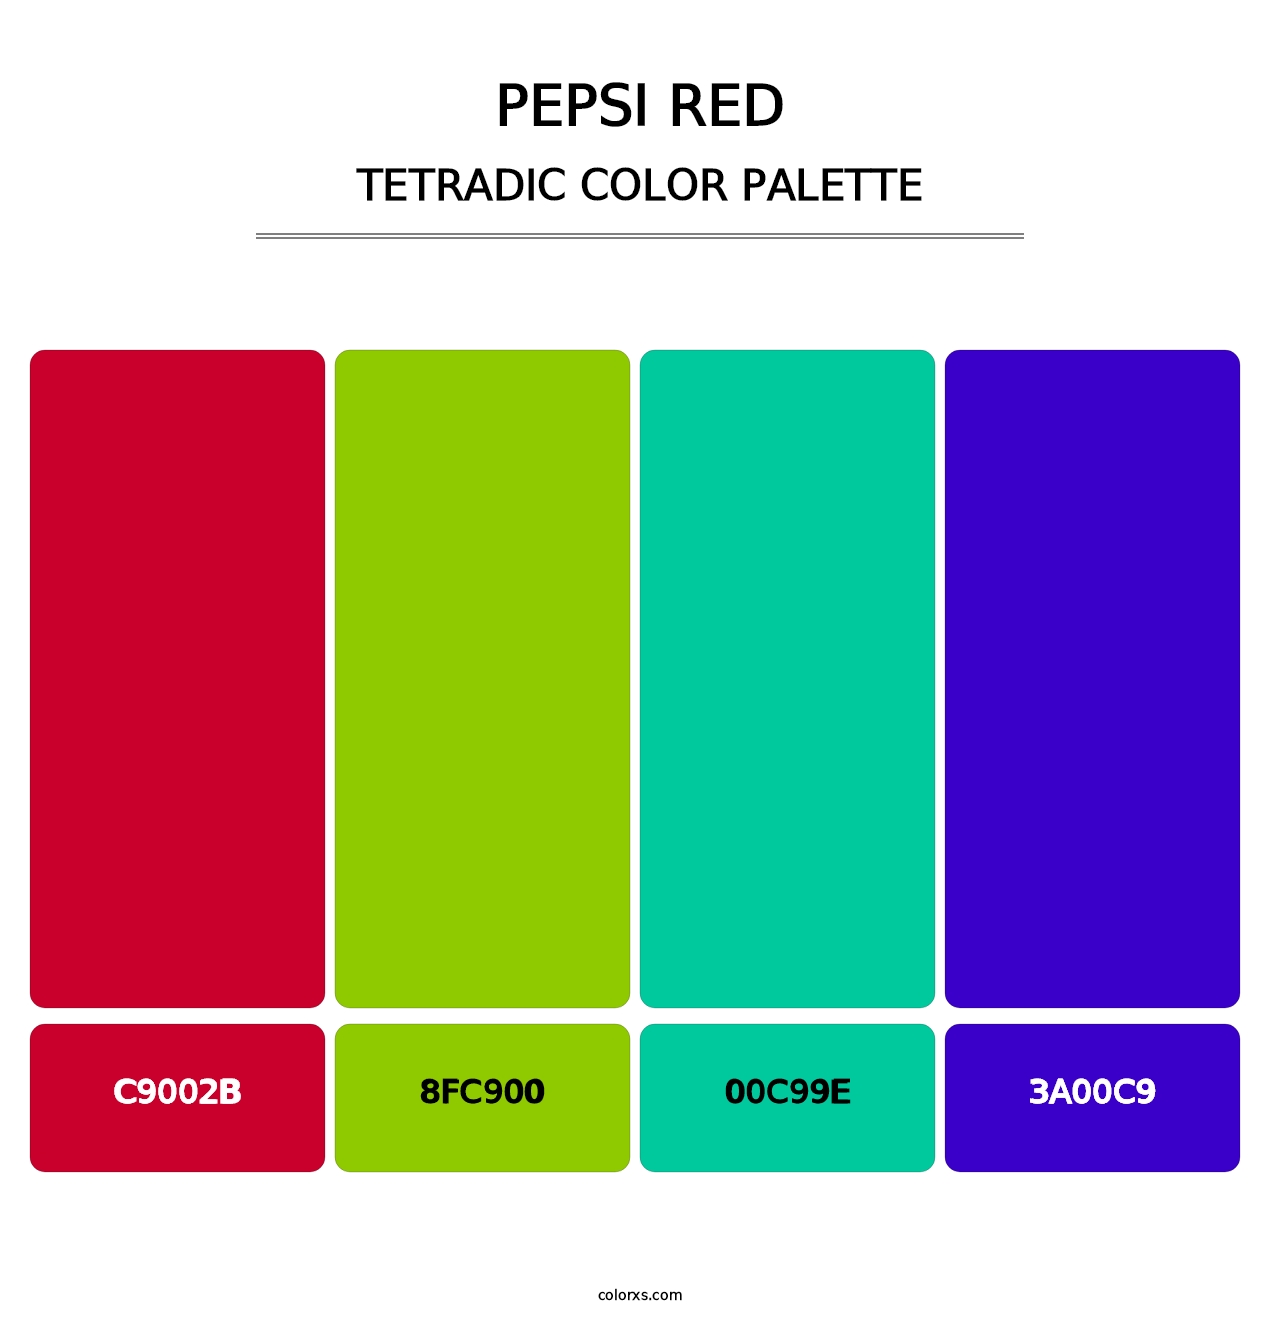 Pepsi Red - Tetradic Color Palette